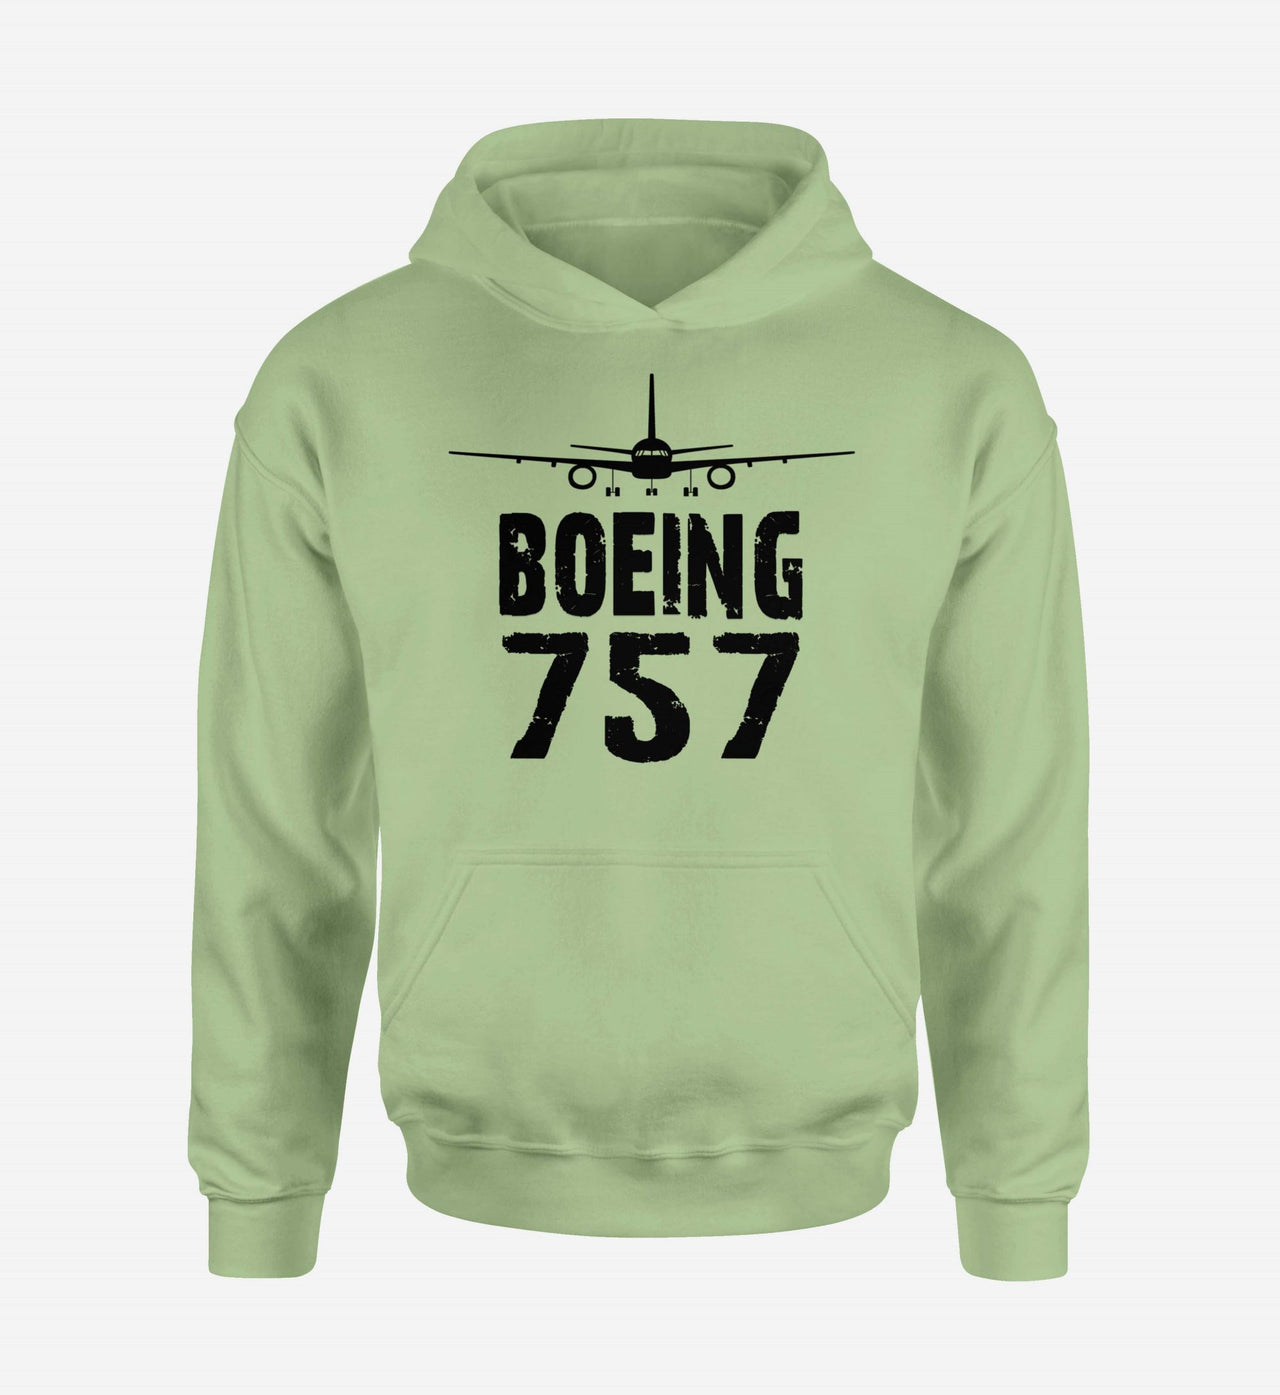 Boeing 757 & Plane Designed Hoodies